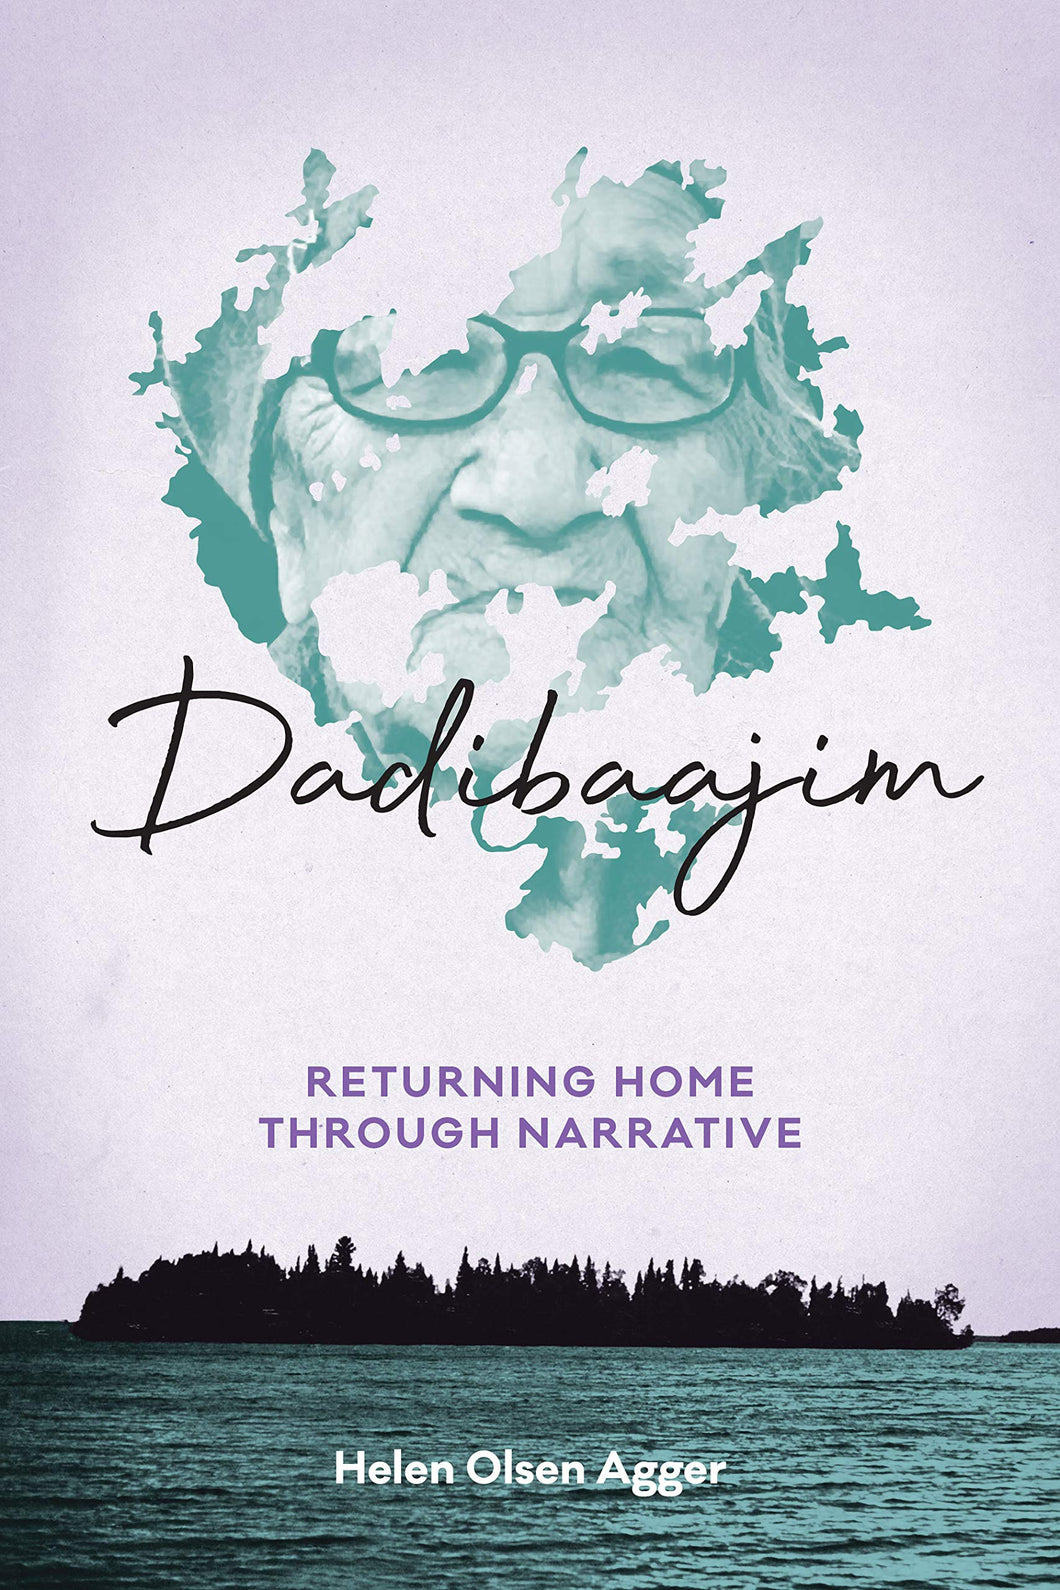 Dadibaajim: Returning Home Through Narrative [Helen Olsen Agger]